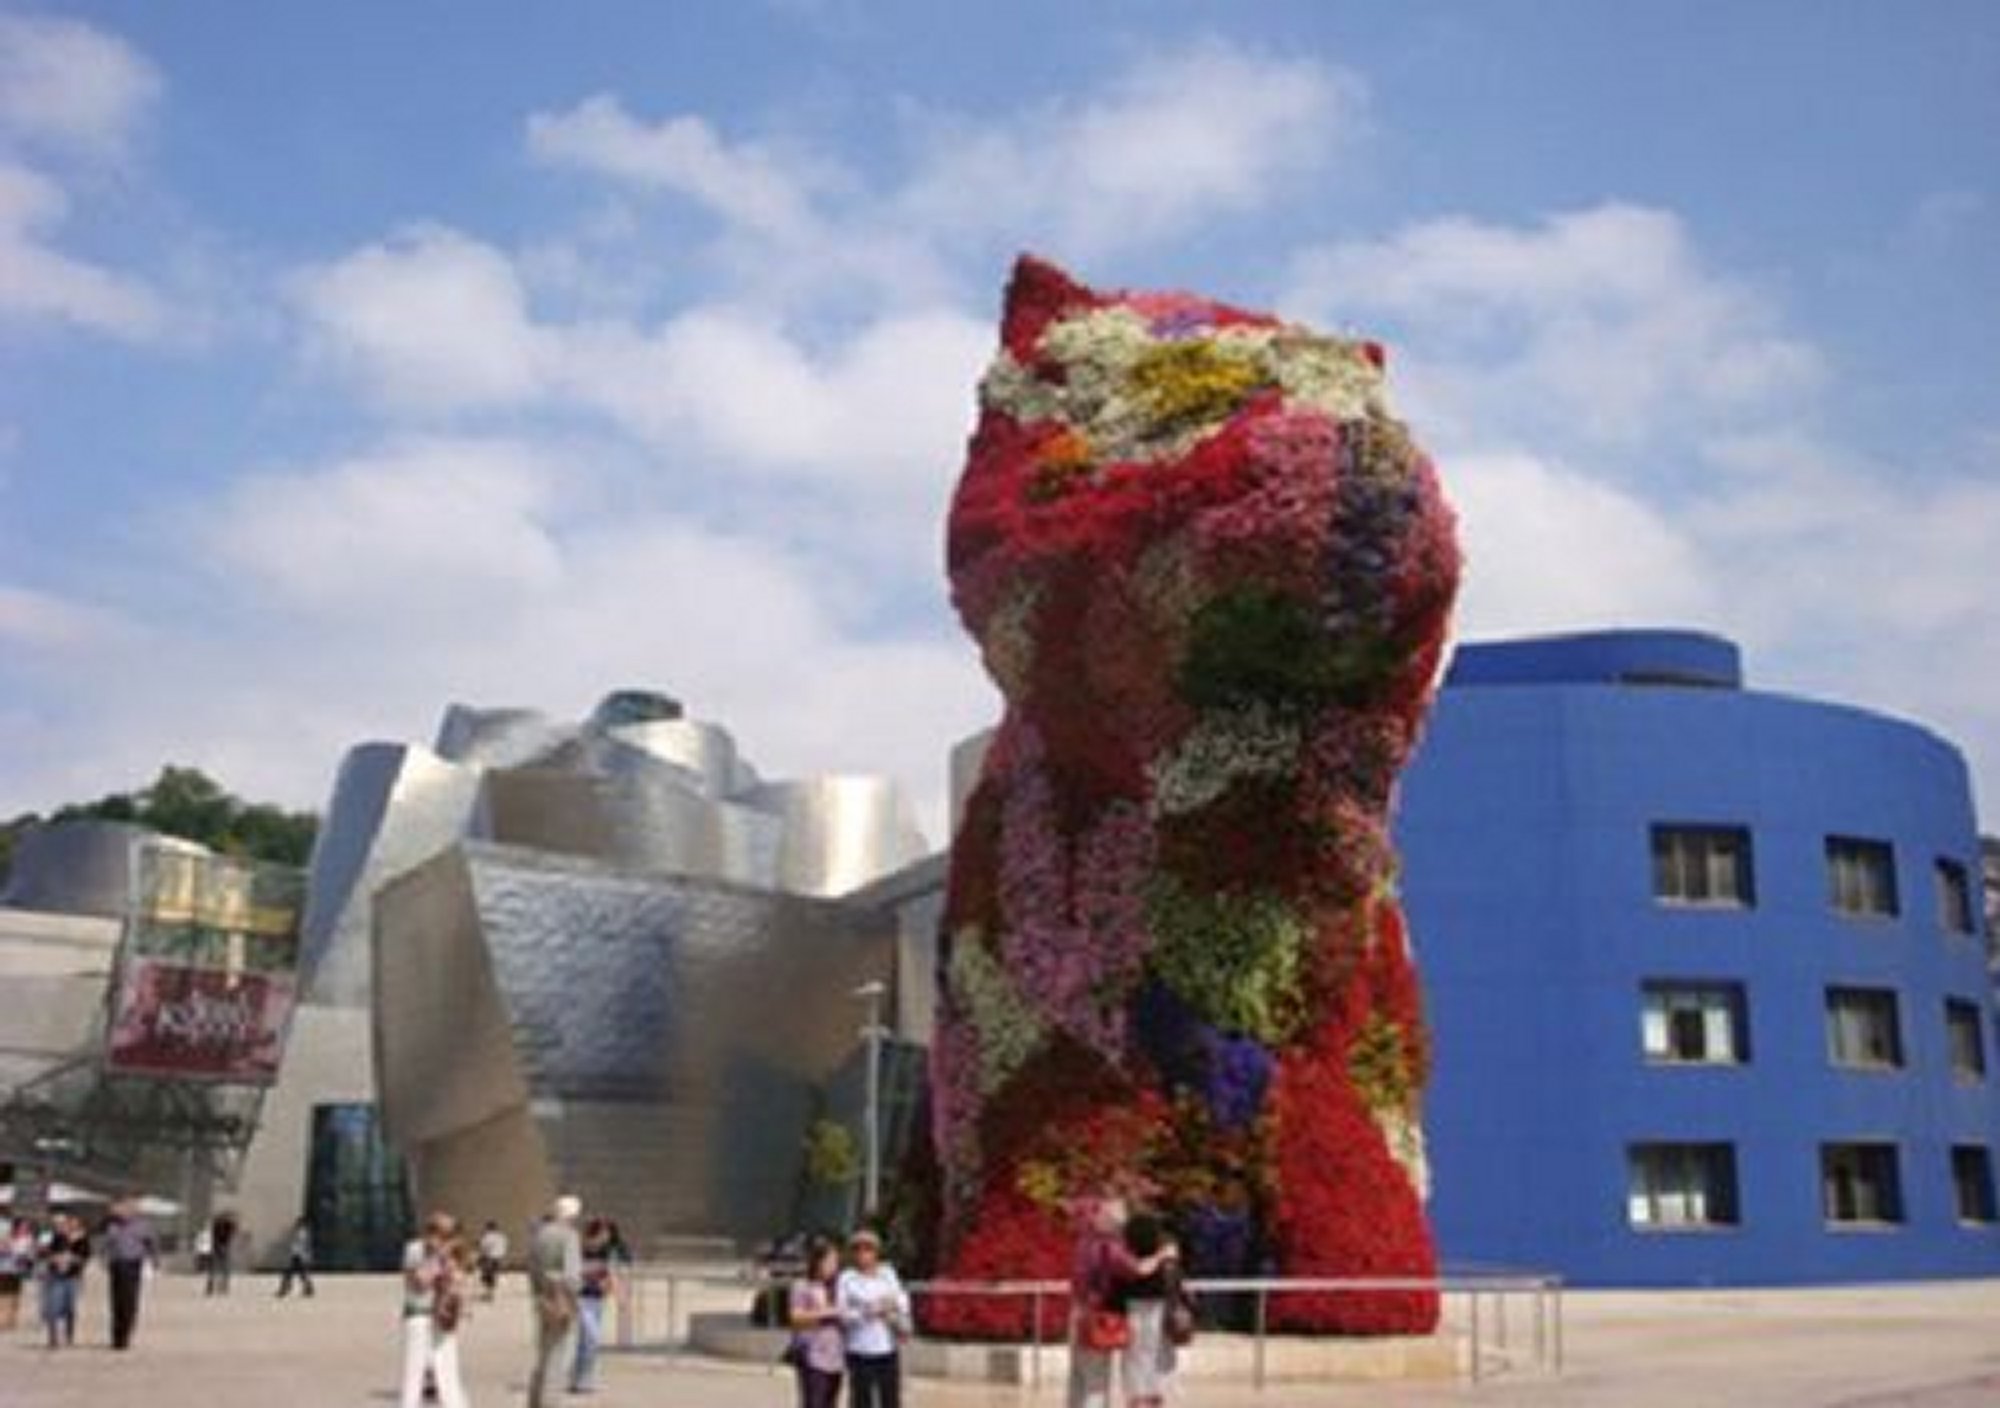 book Walking Tours visits visit Guggenheim Museum Old Quarter of Bilbao and tapas pintxos